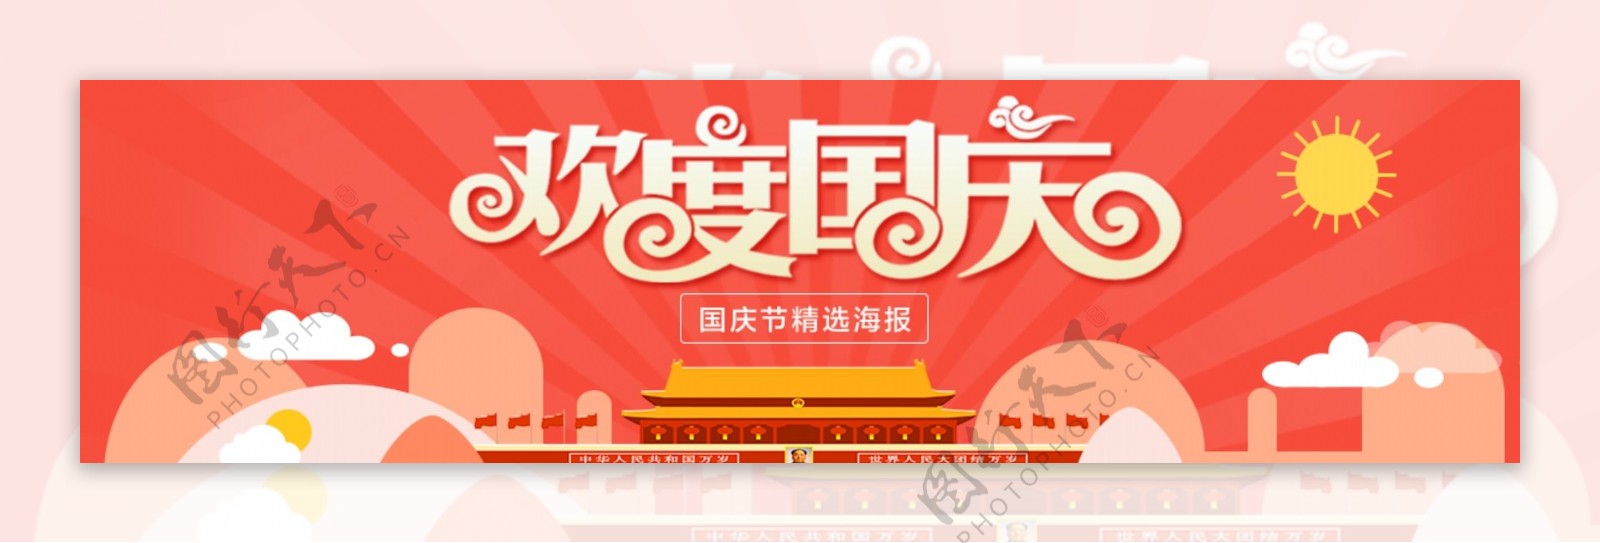 红色扁平卡通国庆banner海报设计